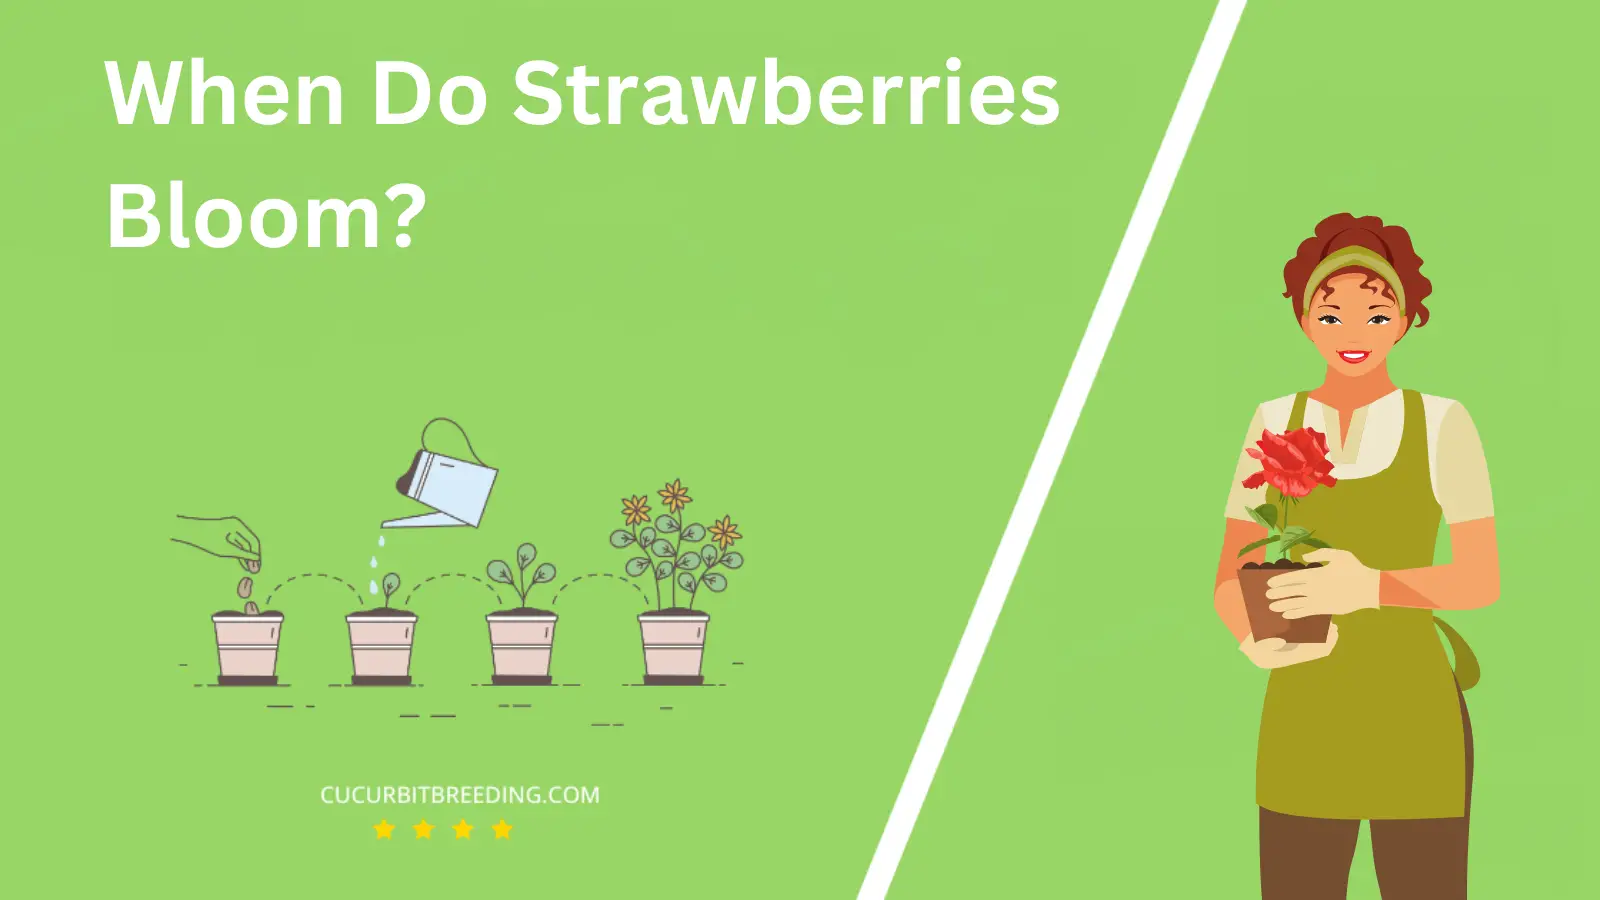 When Do Strawberries Bloom?